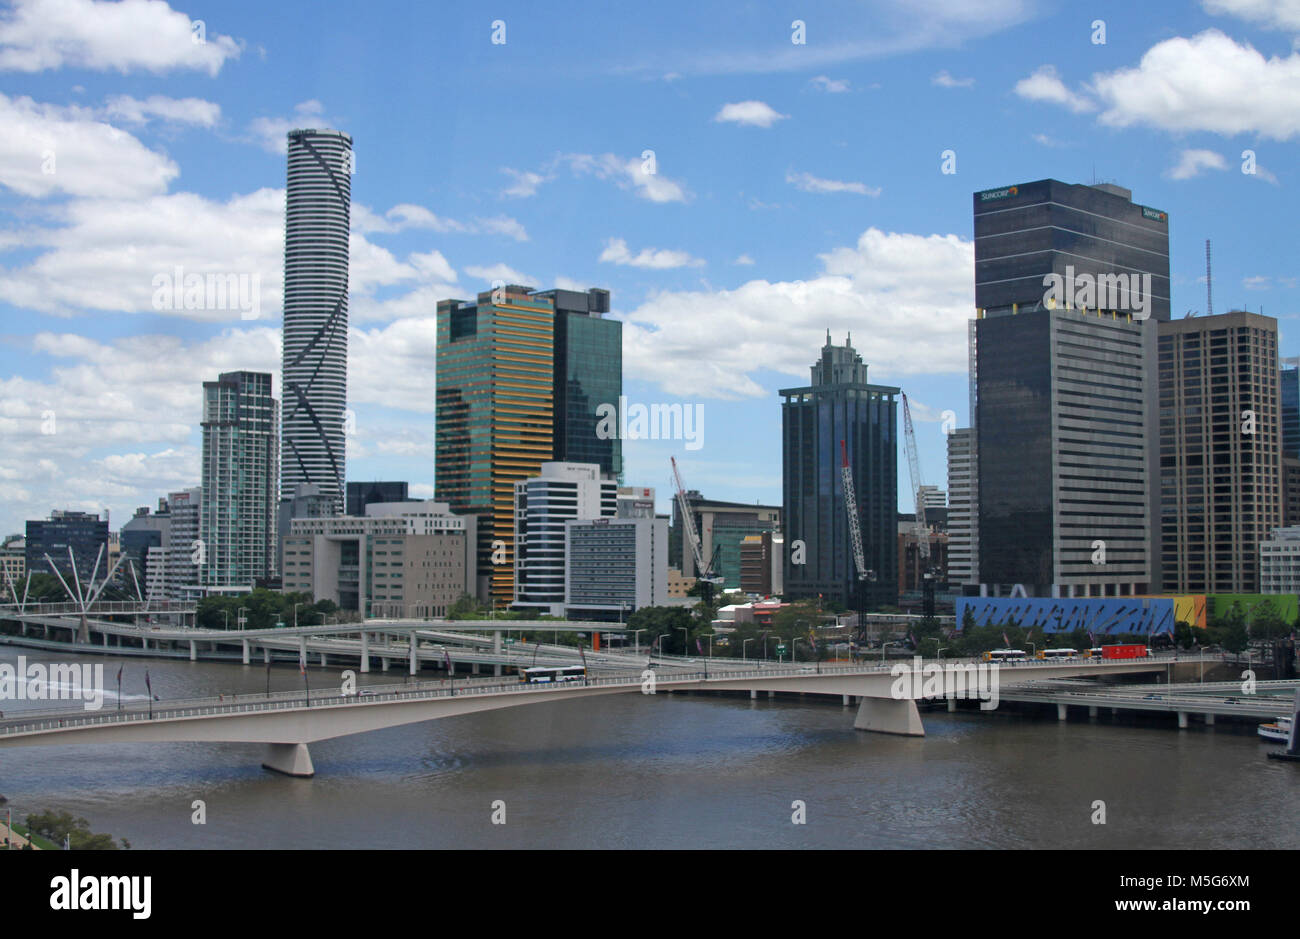 View from the Wheel of Brisbane showing cityscape and the Victoria Bridge, Brisbane, Australia Stock Photo